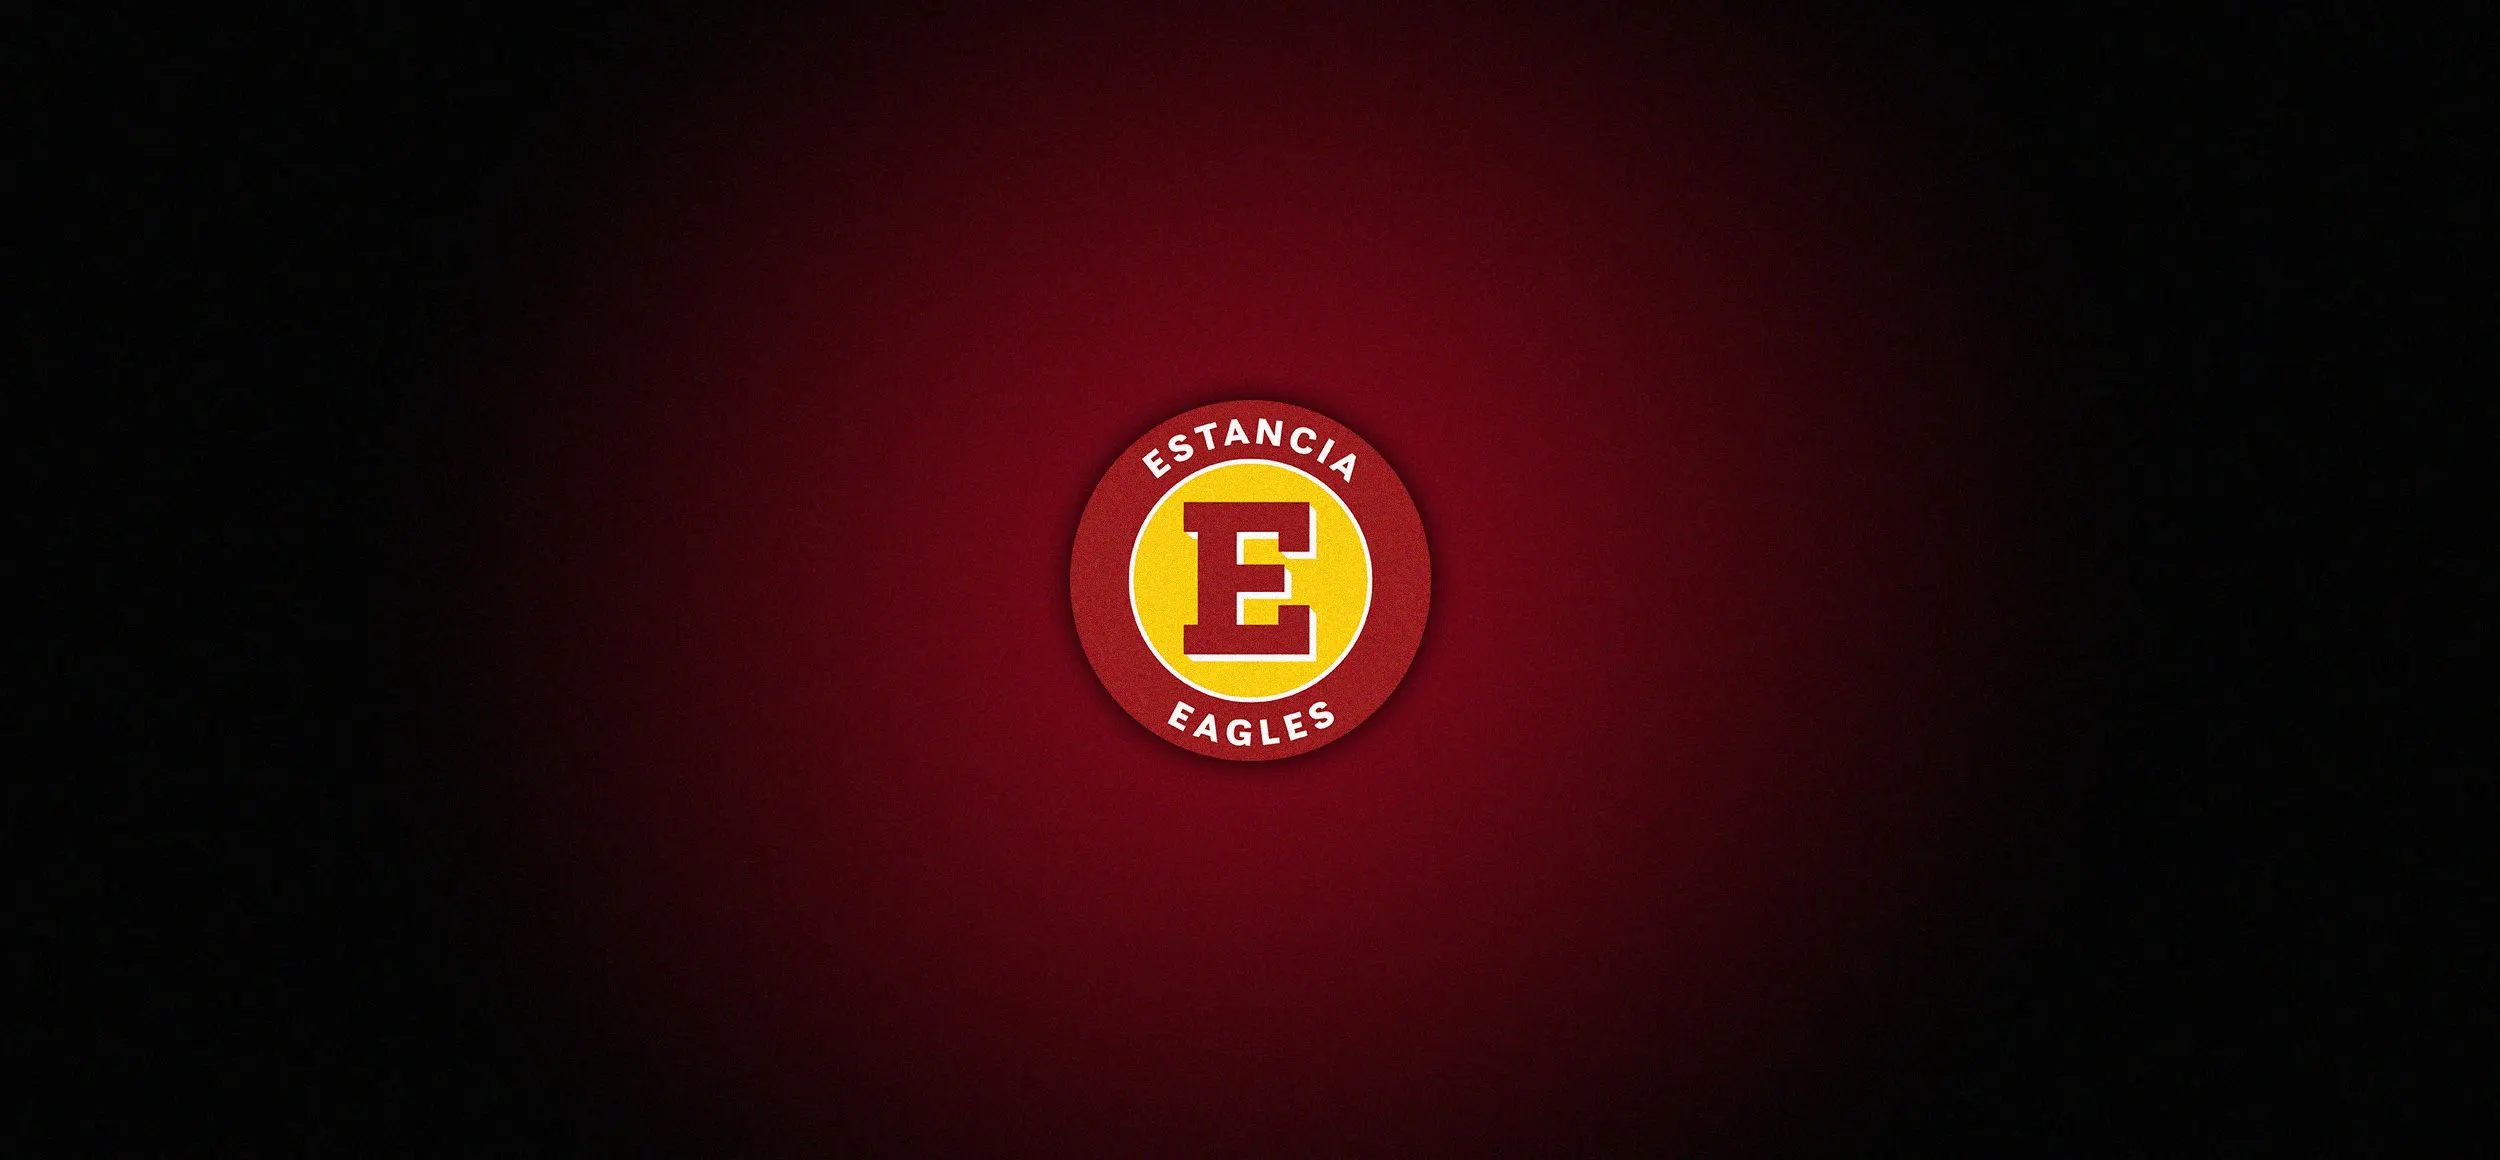 Estancia Eagles Football